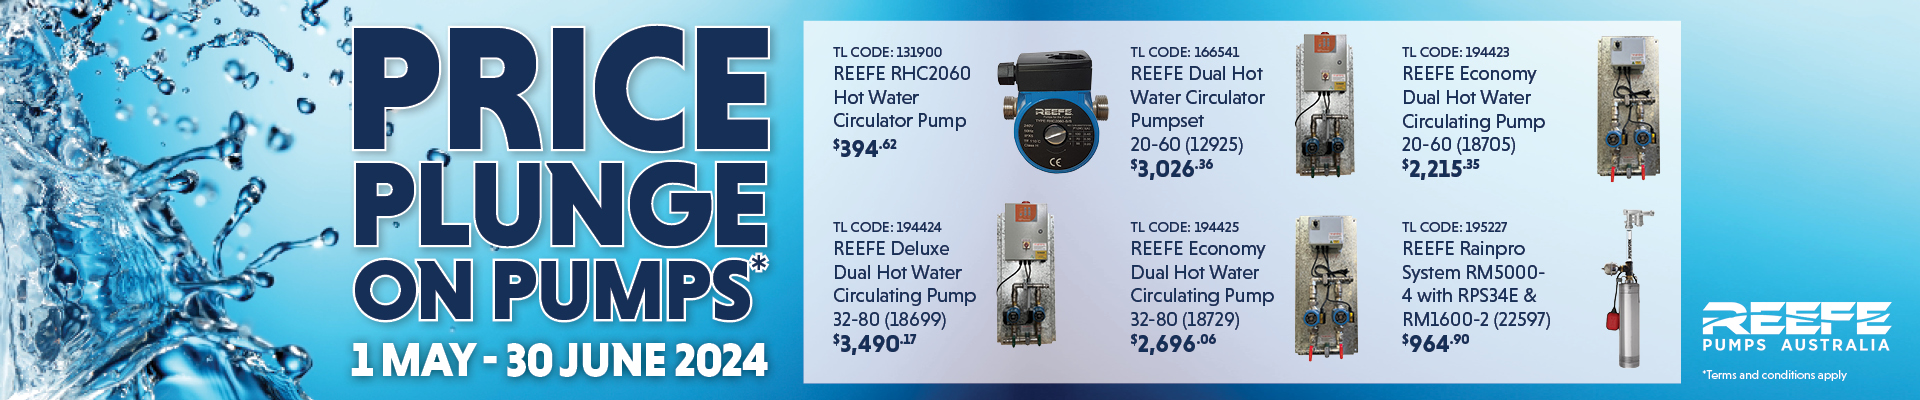 Reefe Pumps Price Plunge Promotion